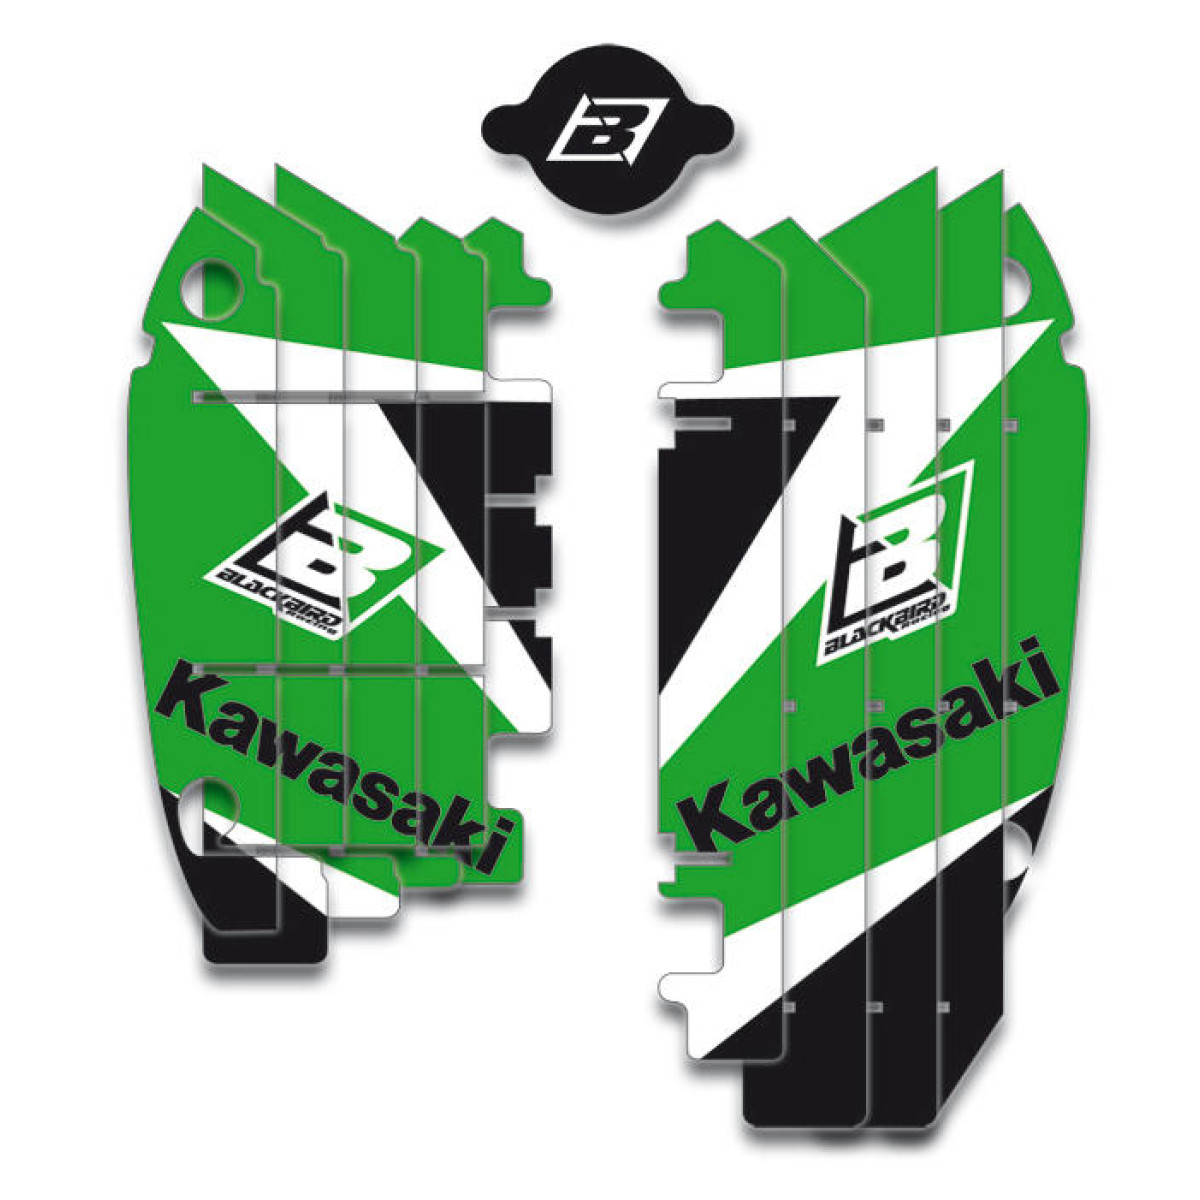 Blackbird Racing Autocollants pour Grille de Radiateur Dream 3 Kawasaki KXF 450 09-15, Vert/Noir